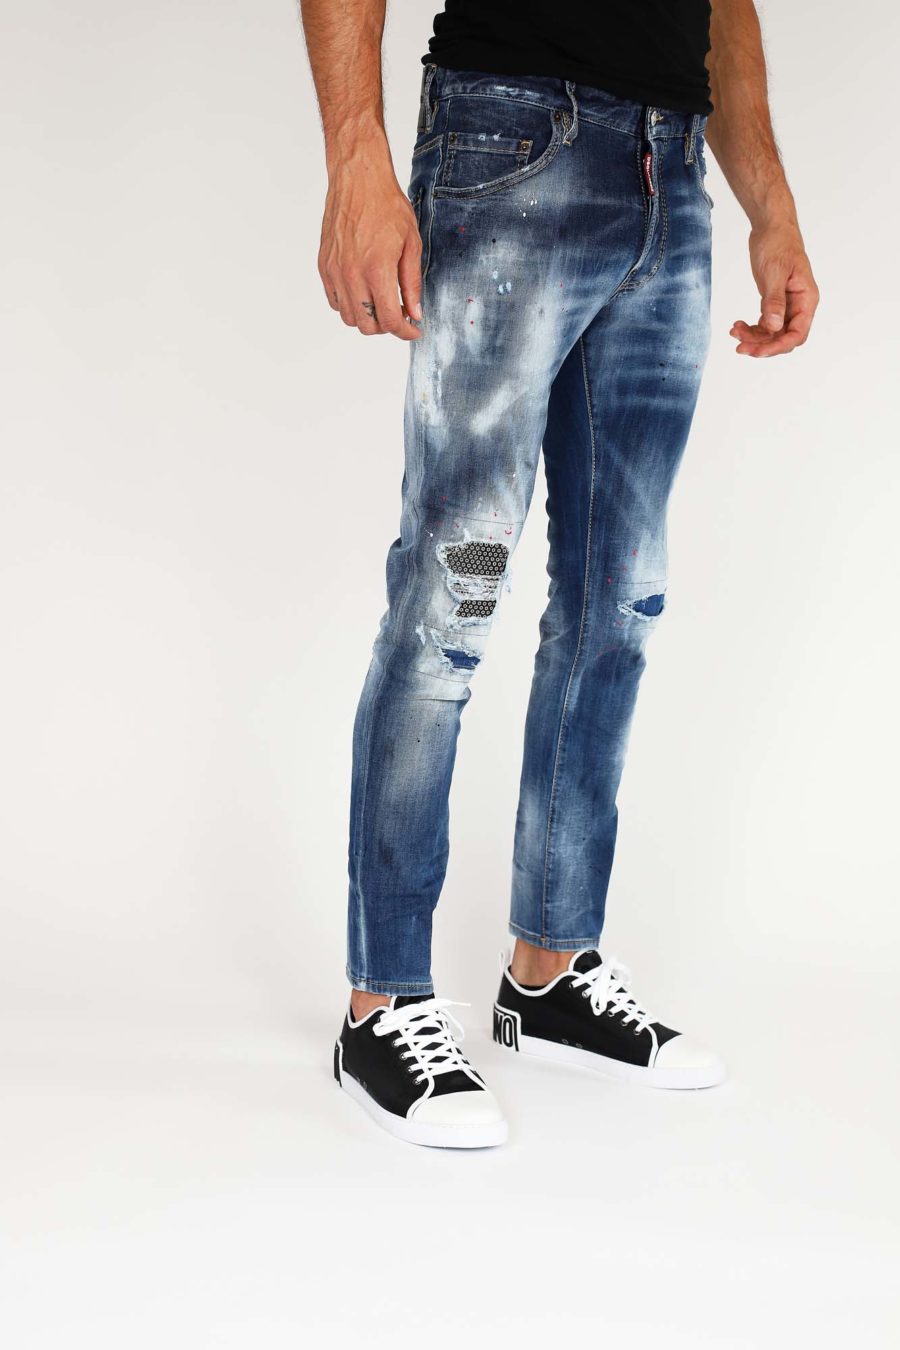 Jeans "Skater" azul con parche taches - IMG 9803